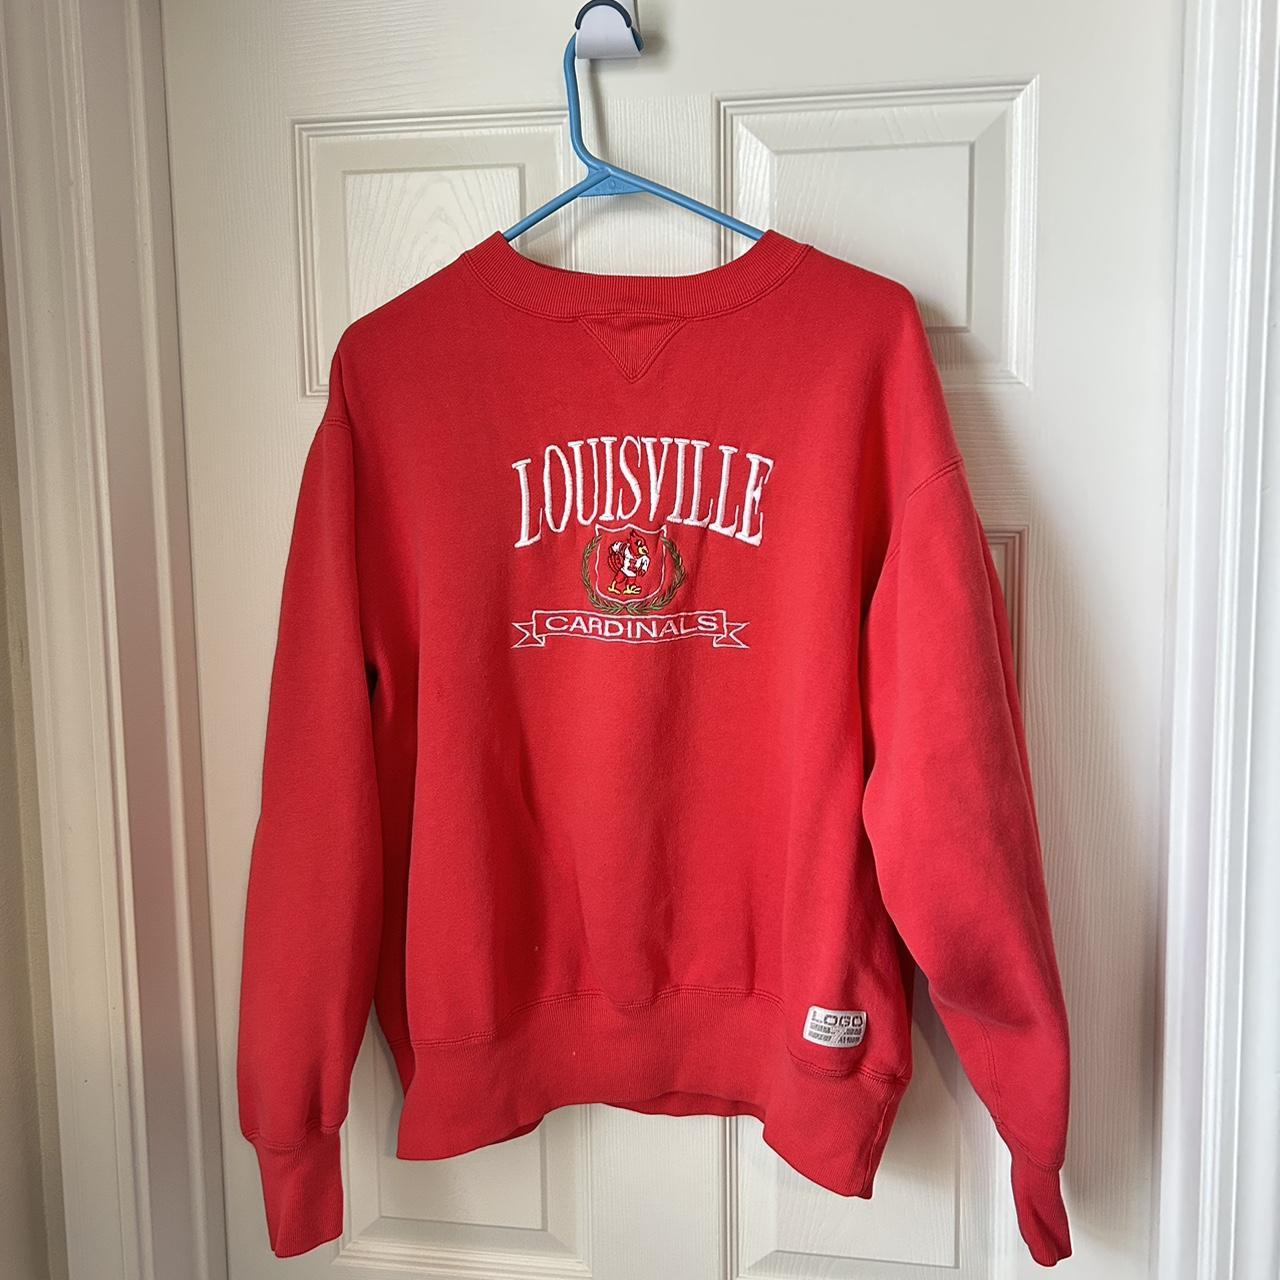  University of Louisville Cardinals Large Sweatshirt